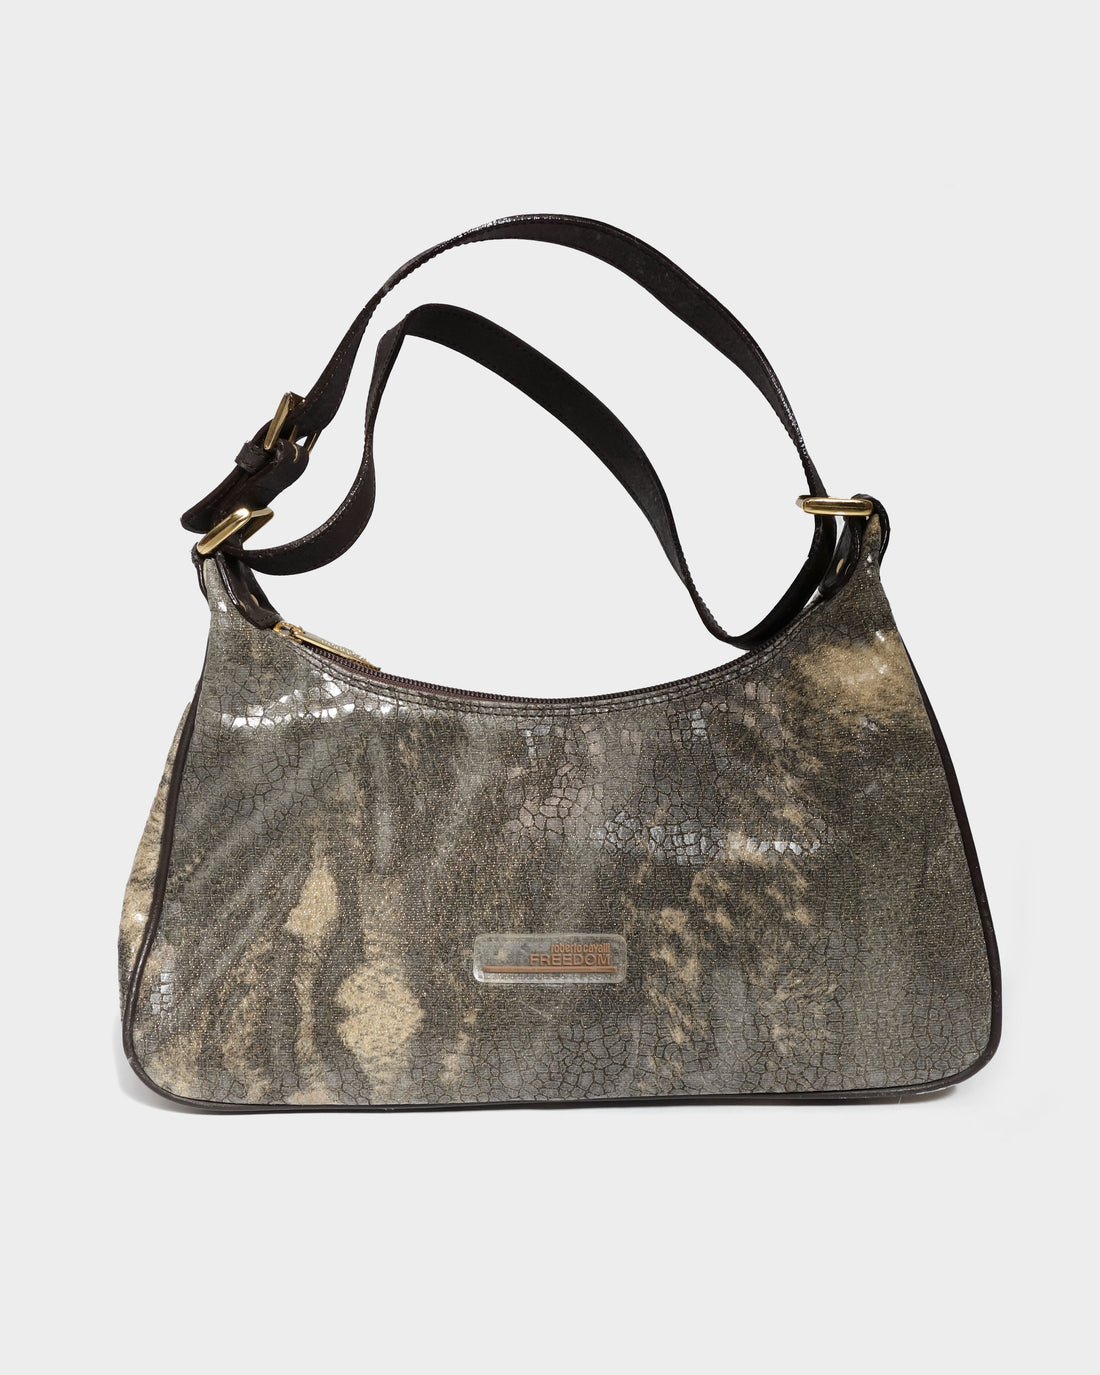 Cavalli Freedom Cracked Leather Shoulder Bag 2000's